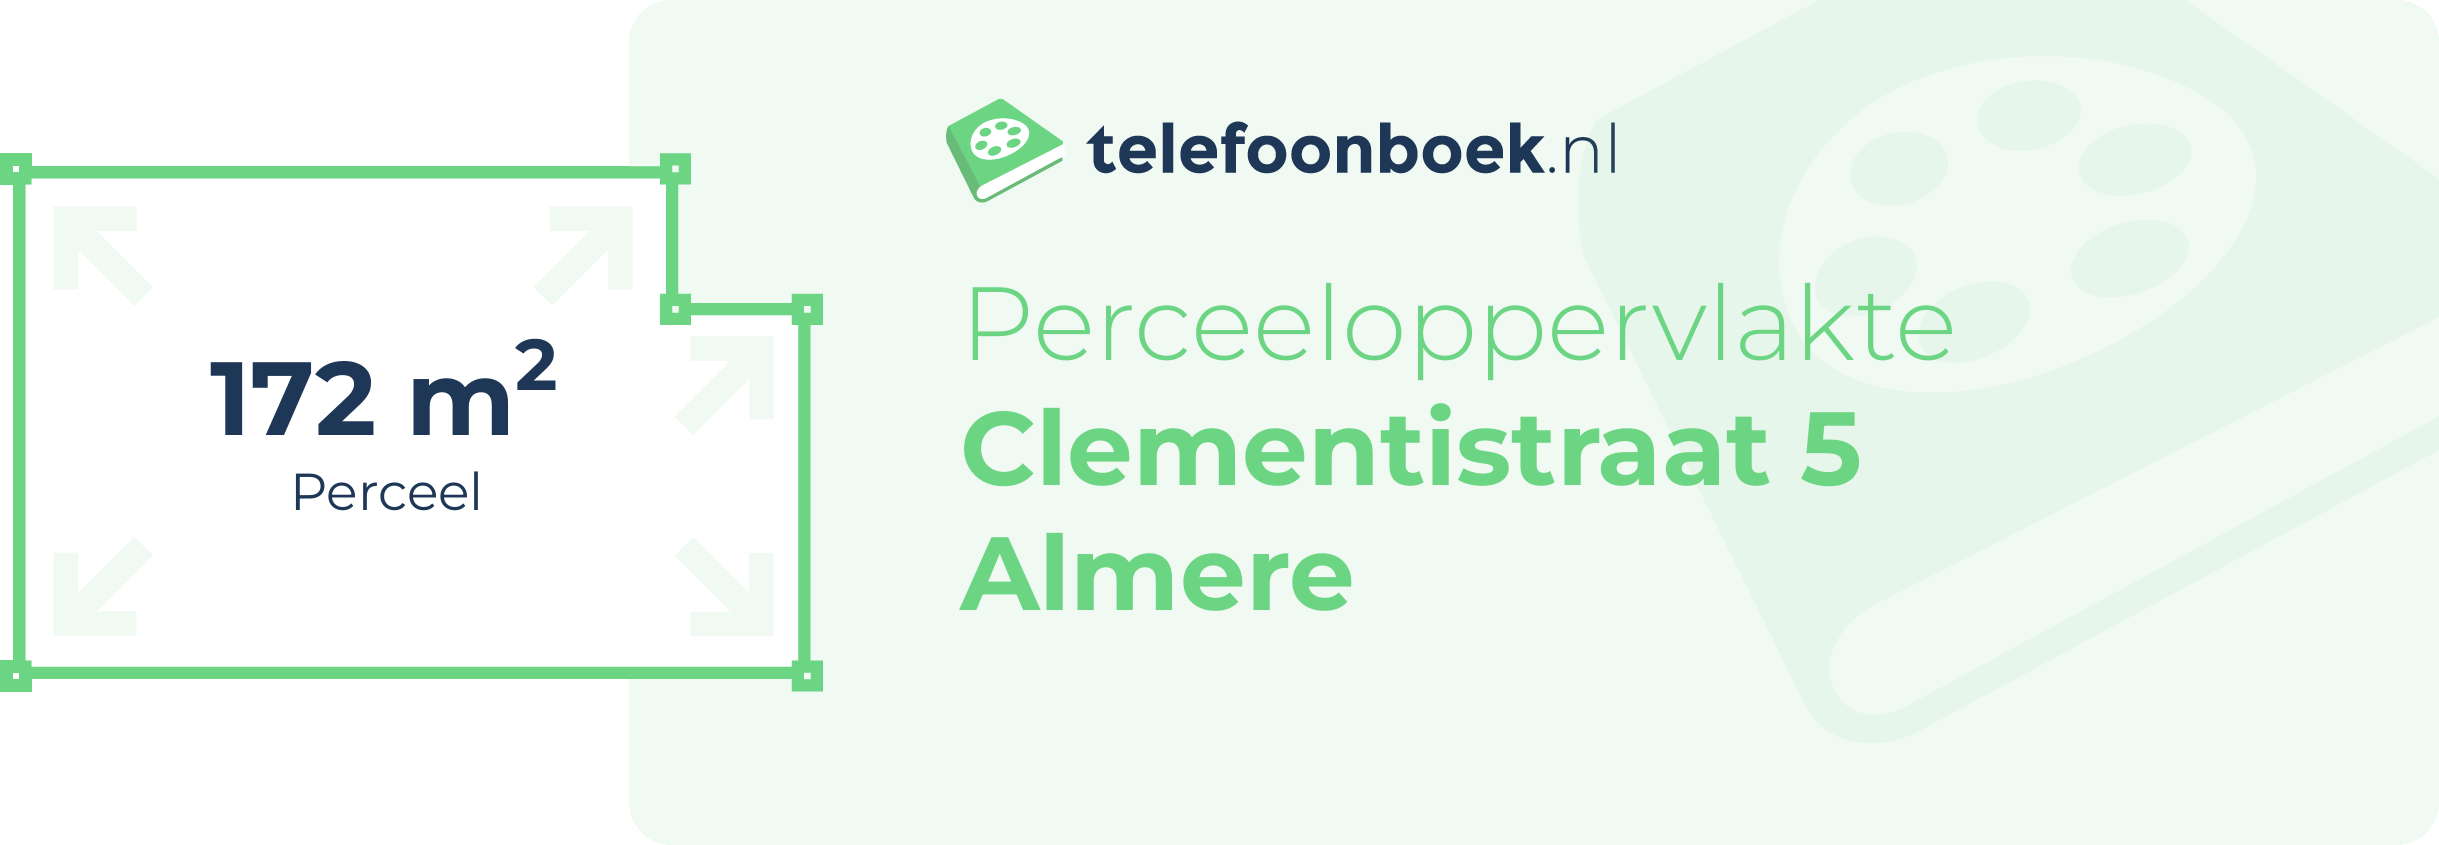 Perceeloppervlakte Clementistraat 5 Almere